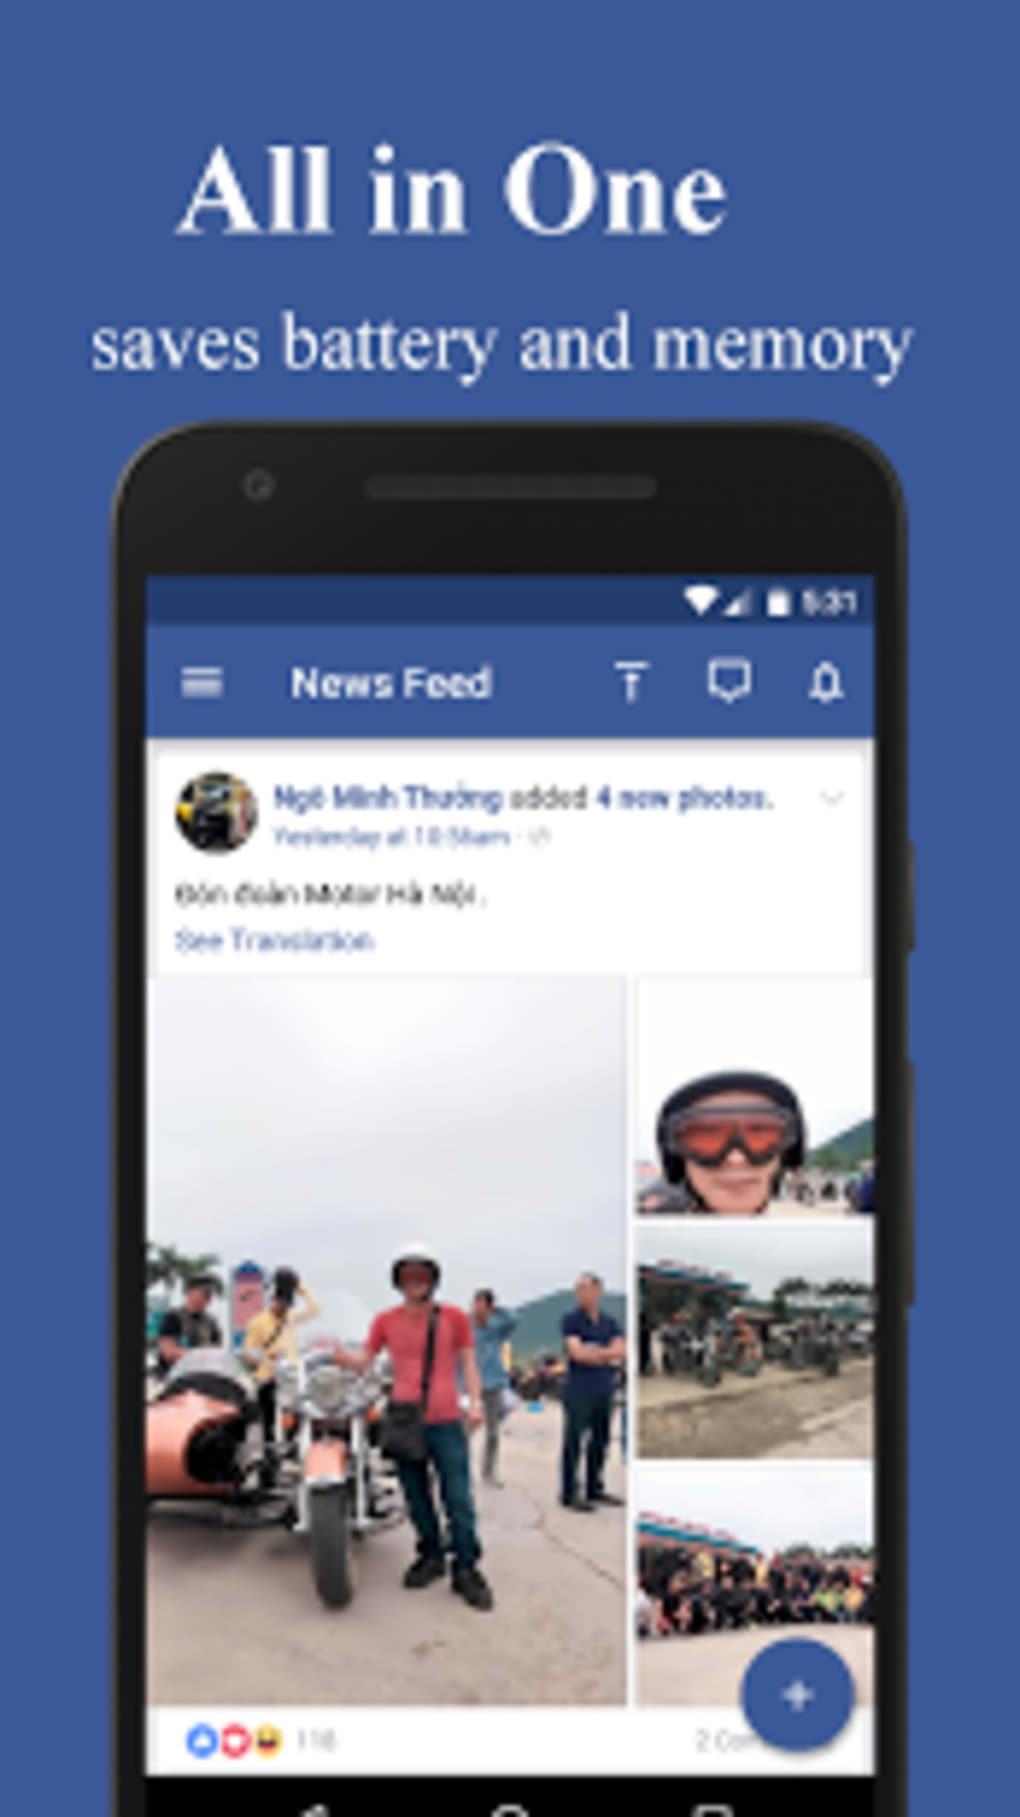 Facebook messenger apk download android